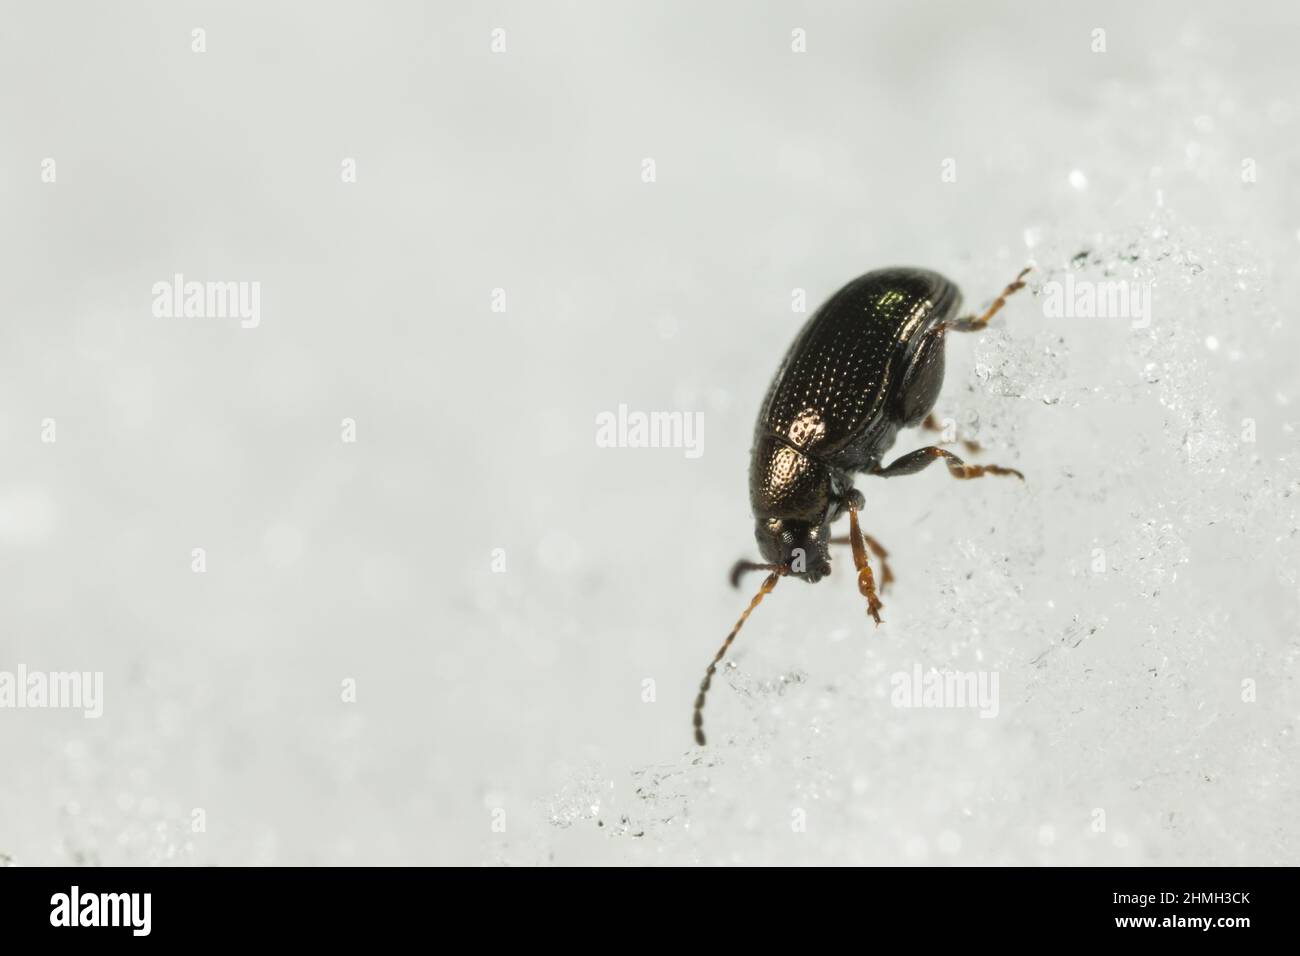 Palearctic flea beetle (Epitrix pubescens) walking on snow Stock Photo